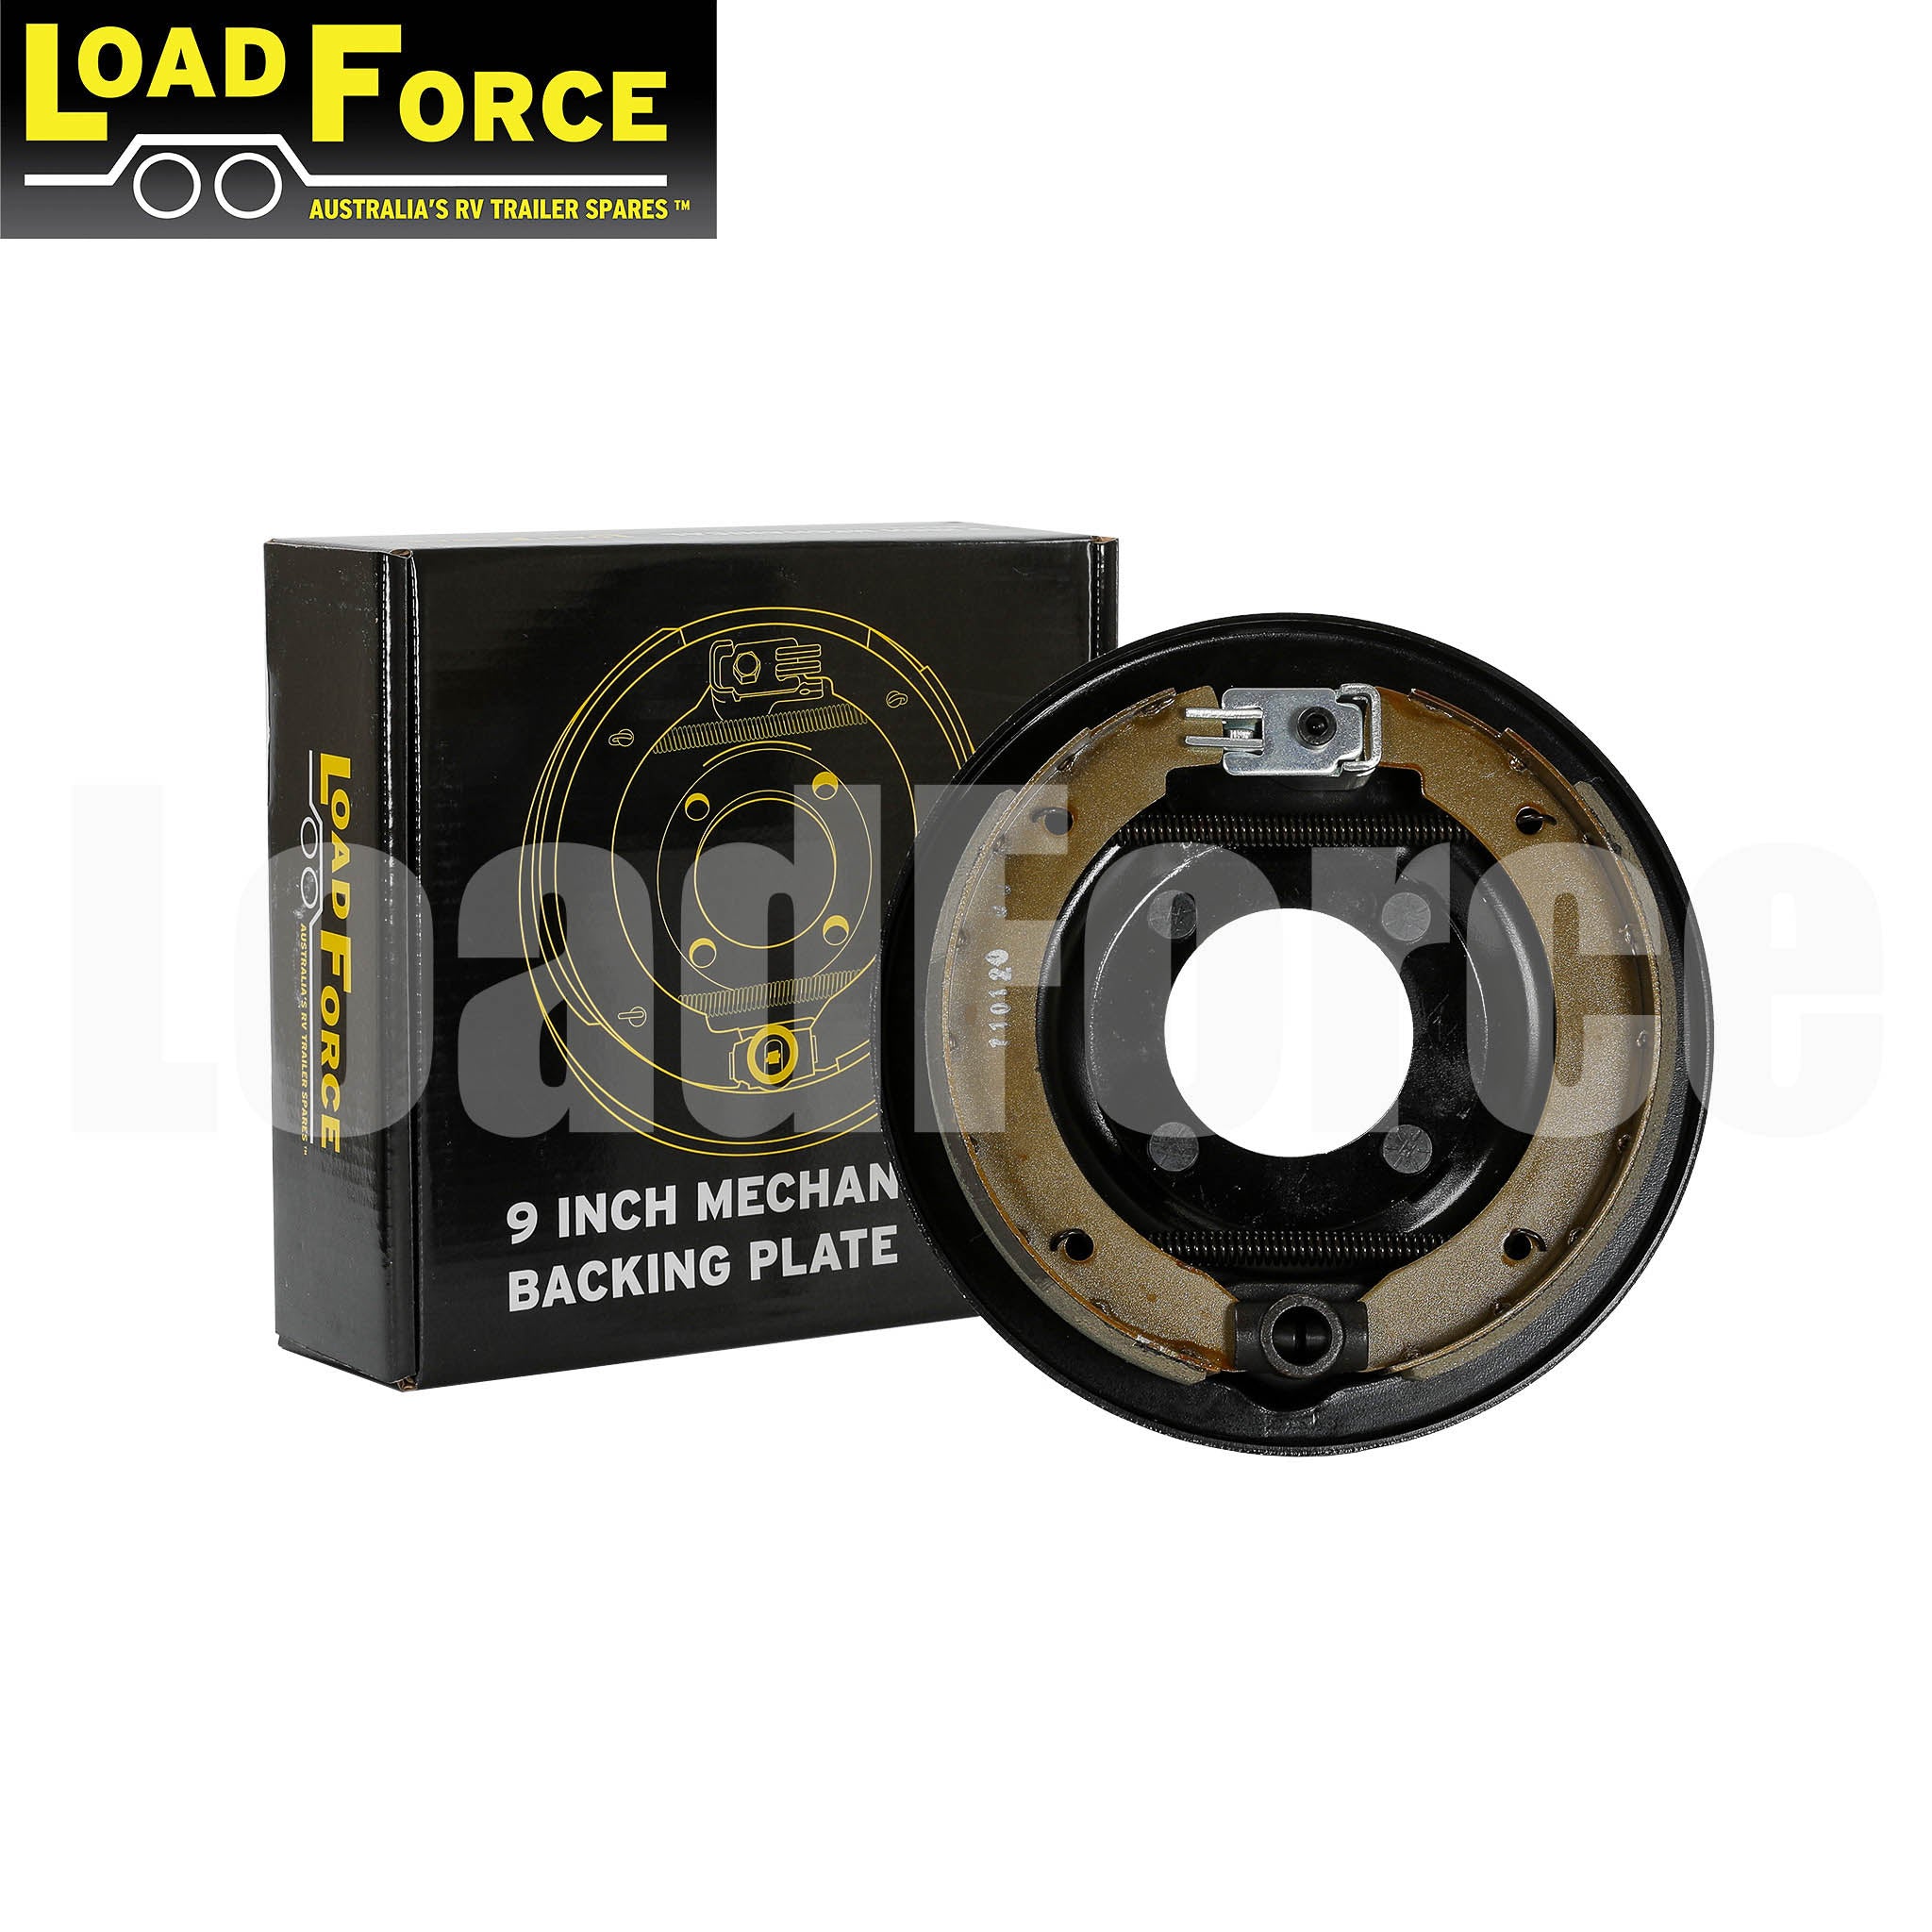 LoadForce 9 inch mechanical backing plate assembly - left hand